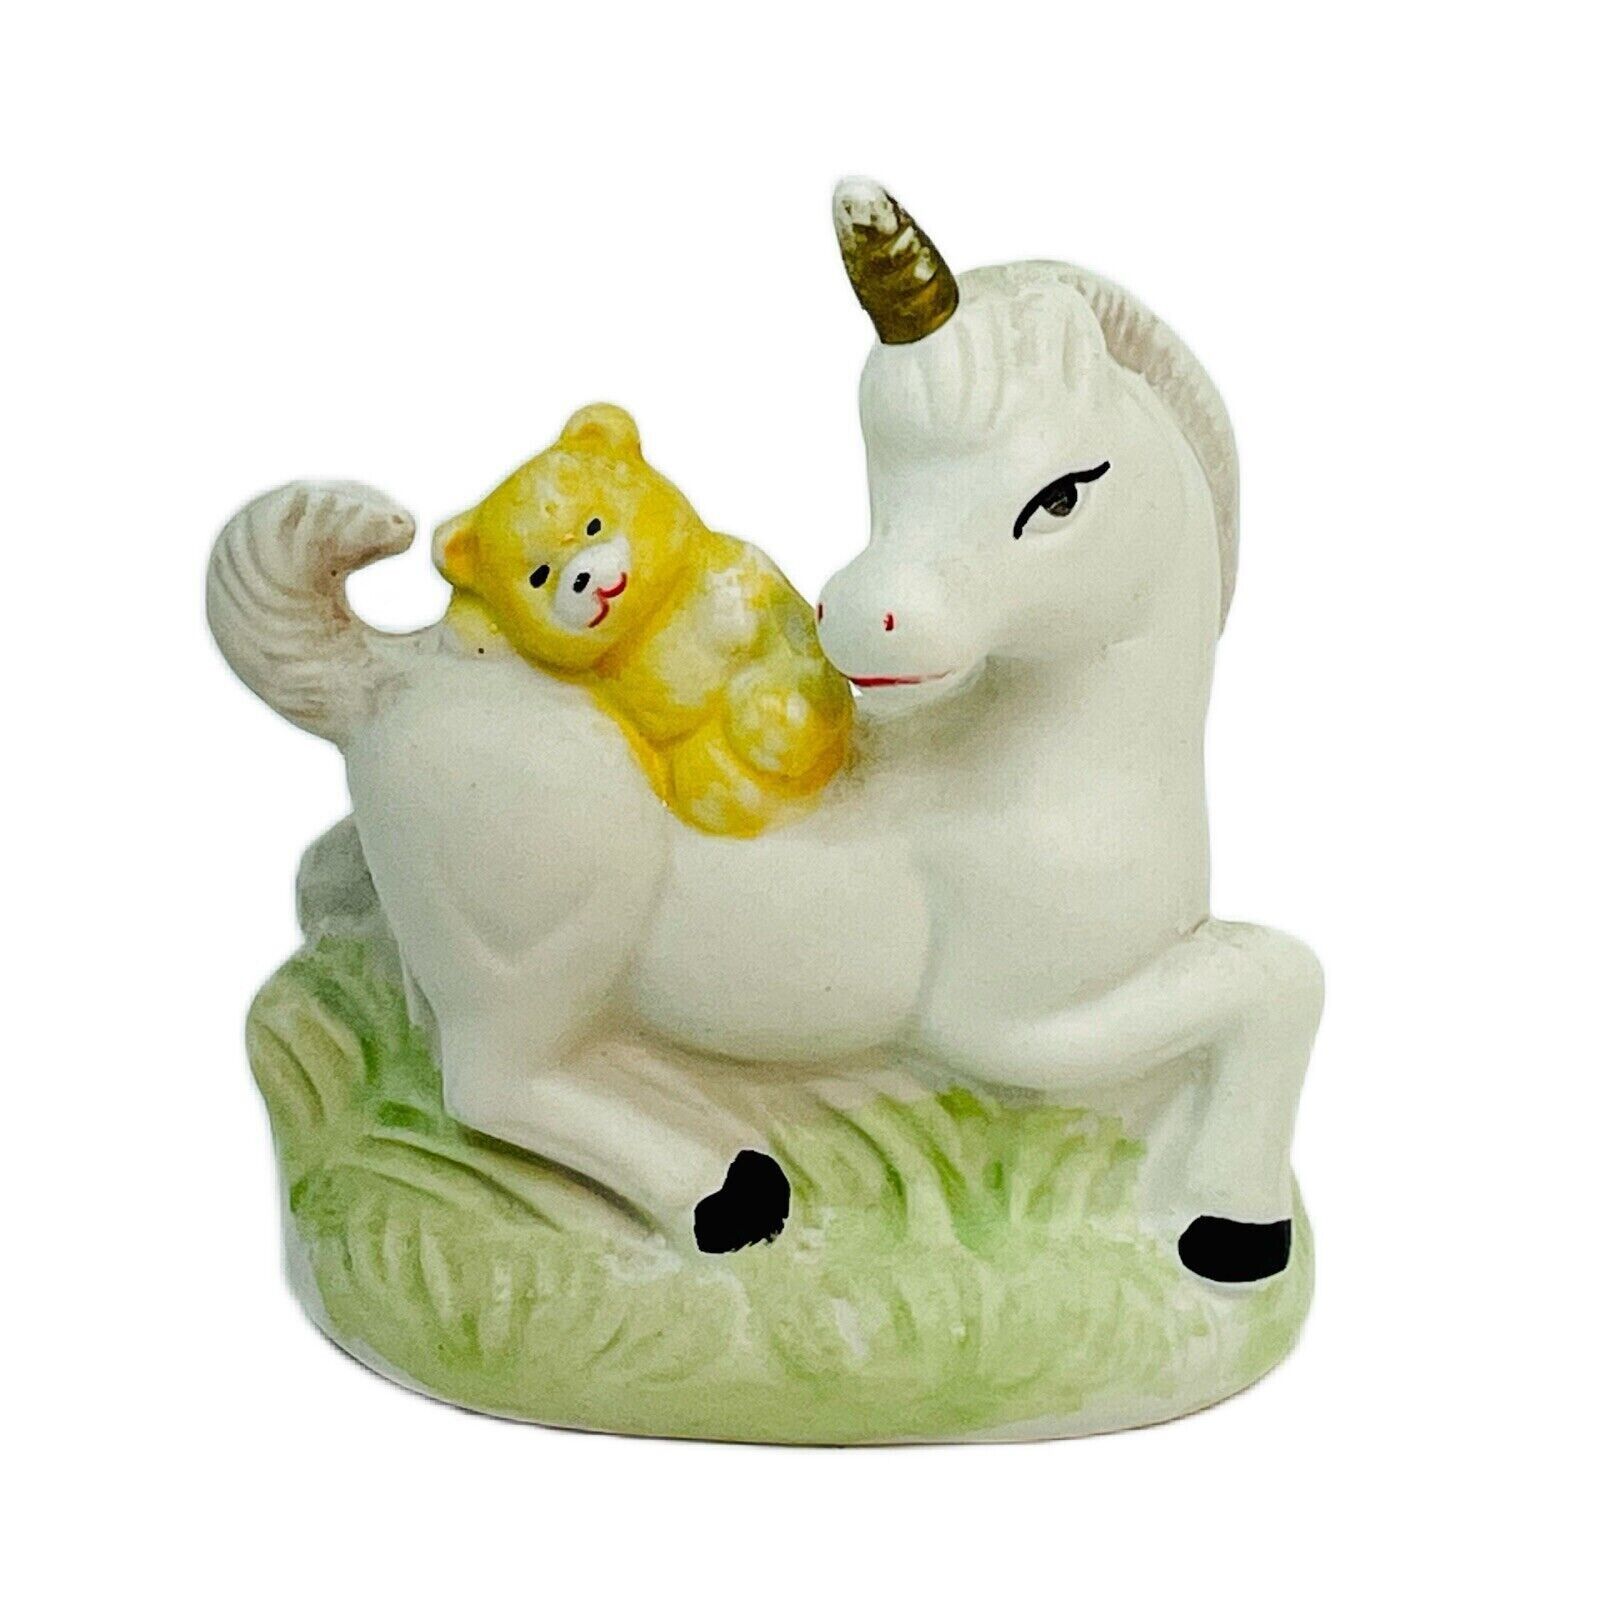 Whimsical Vintage Porcelain Figurine Yellow Teddy Bear Riding White Unicorn